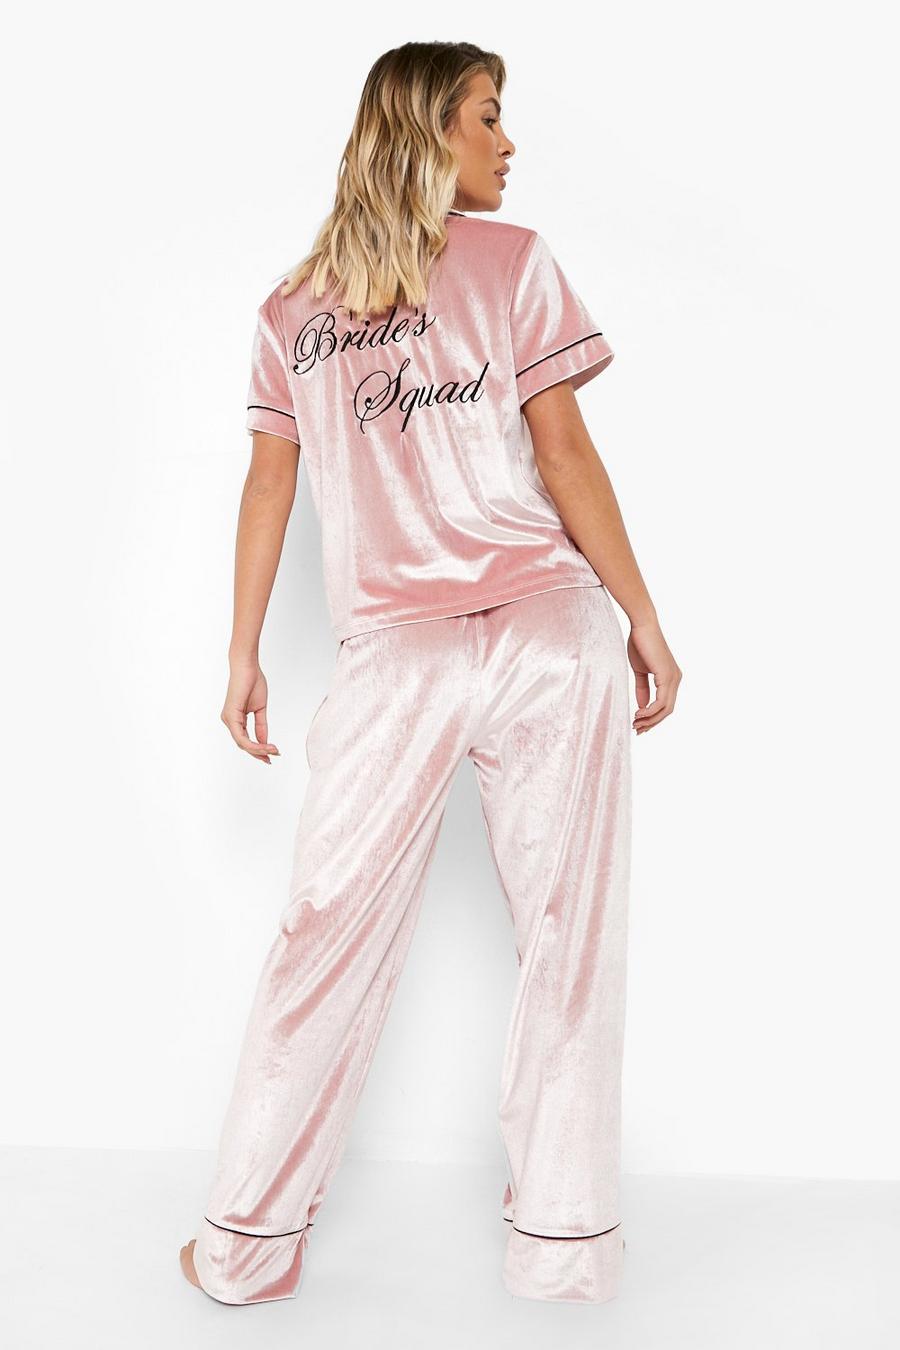 Samt Pyjama-Set mit Bride Squad Stickerei, Blush rosa